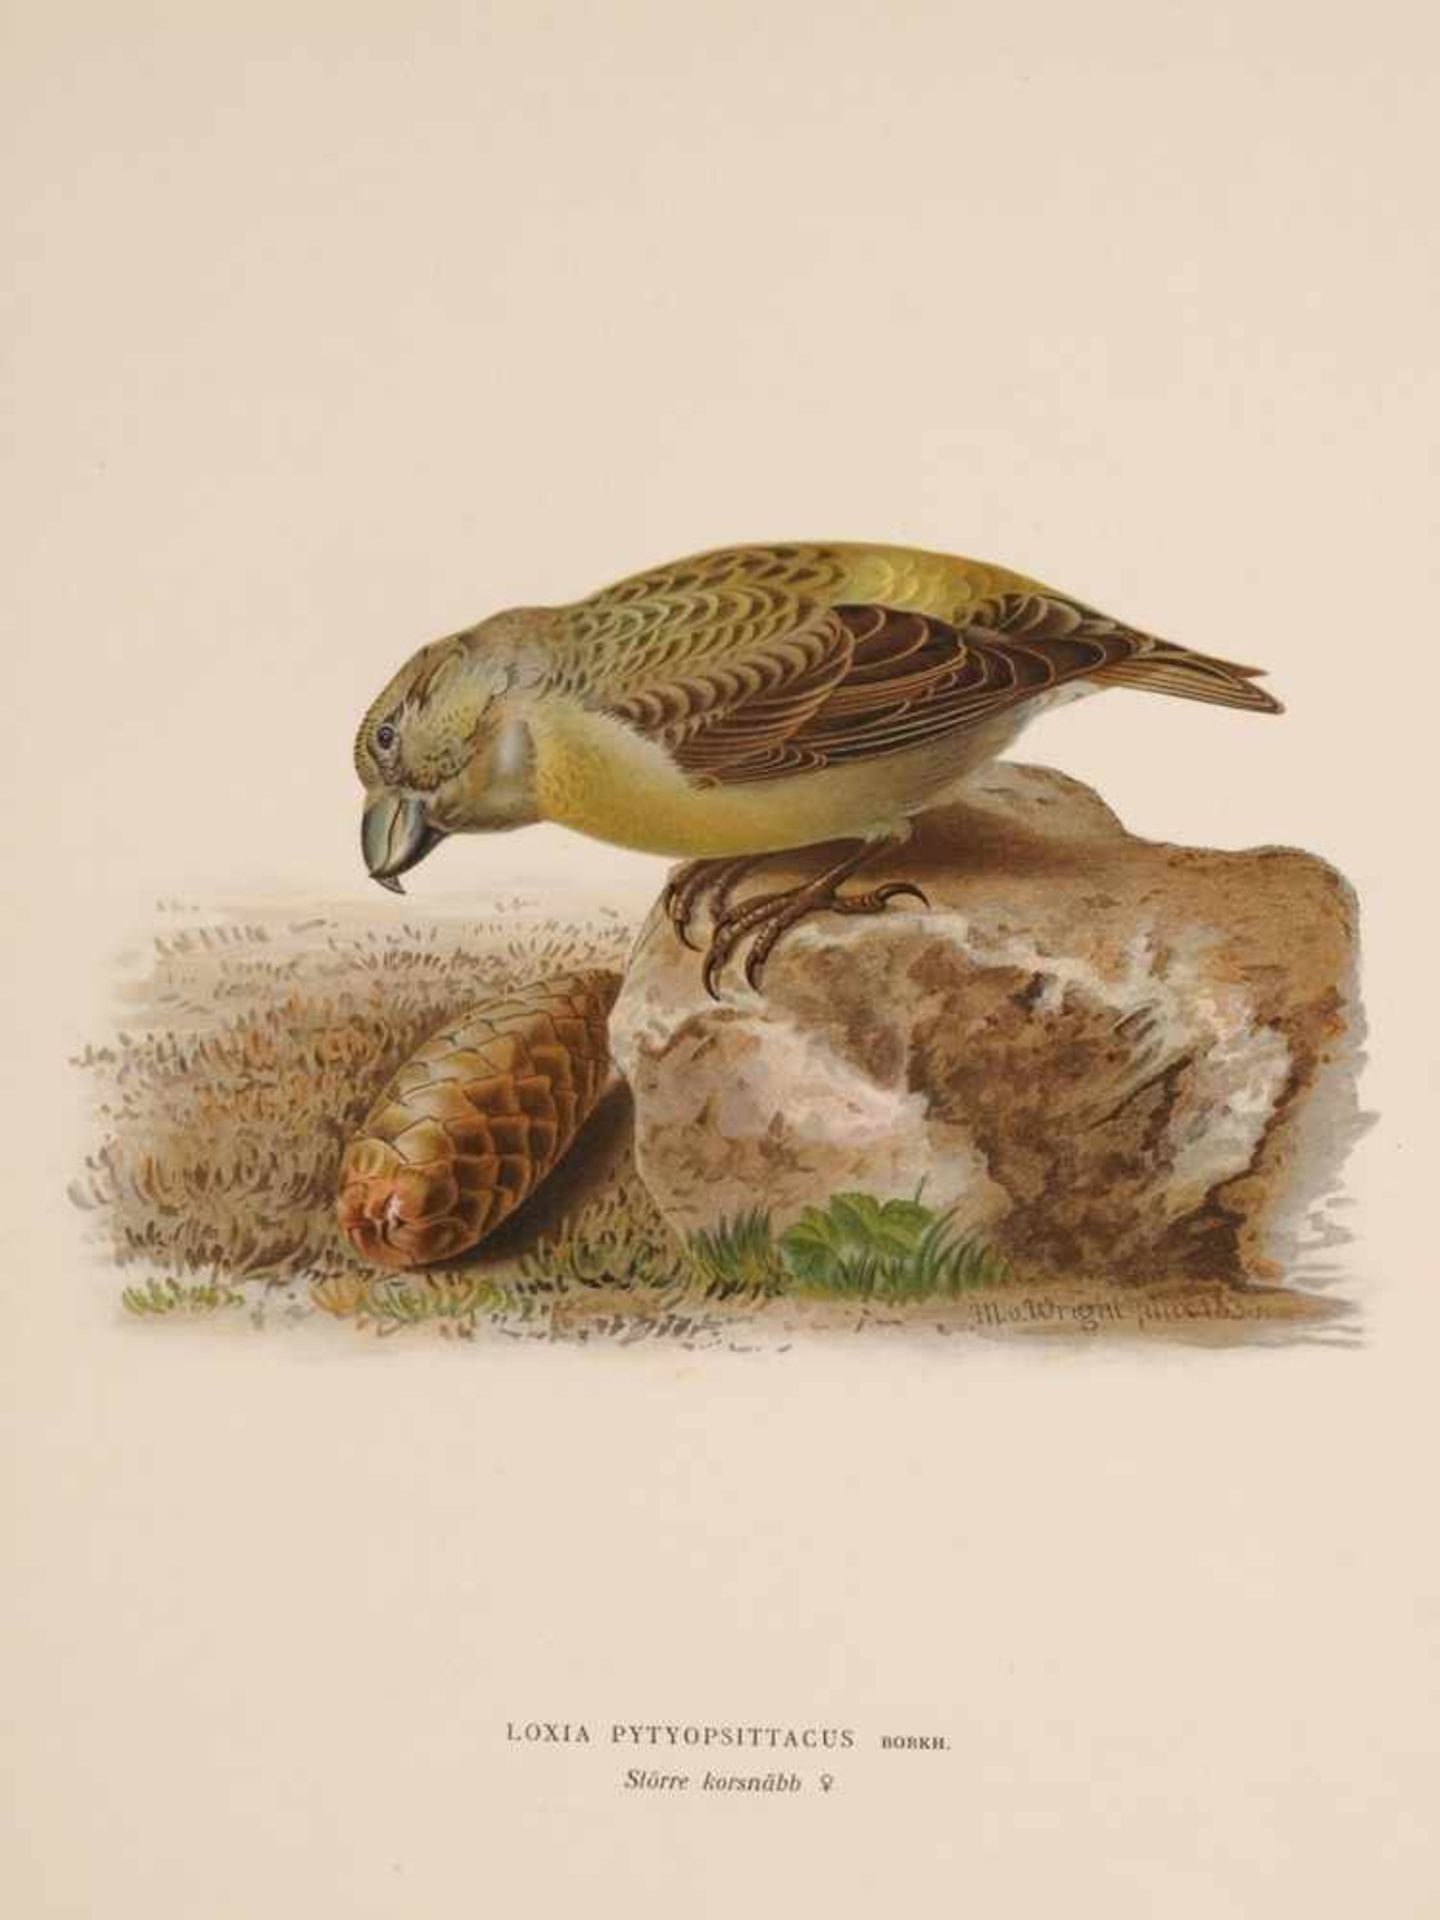 Fünf ornithologische IllustrationenChromolithographie. "Loxia Pytyopsittacus" (